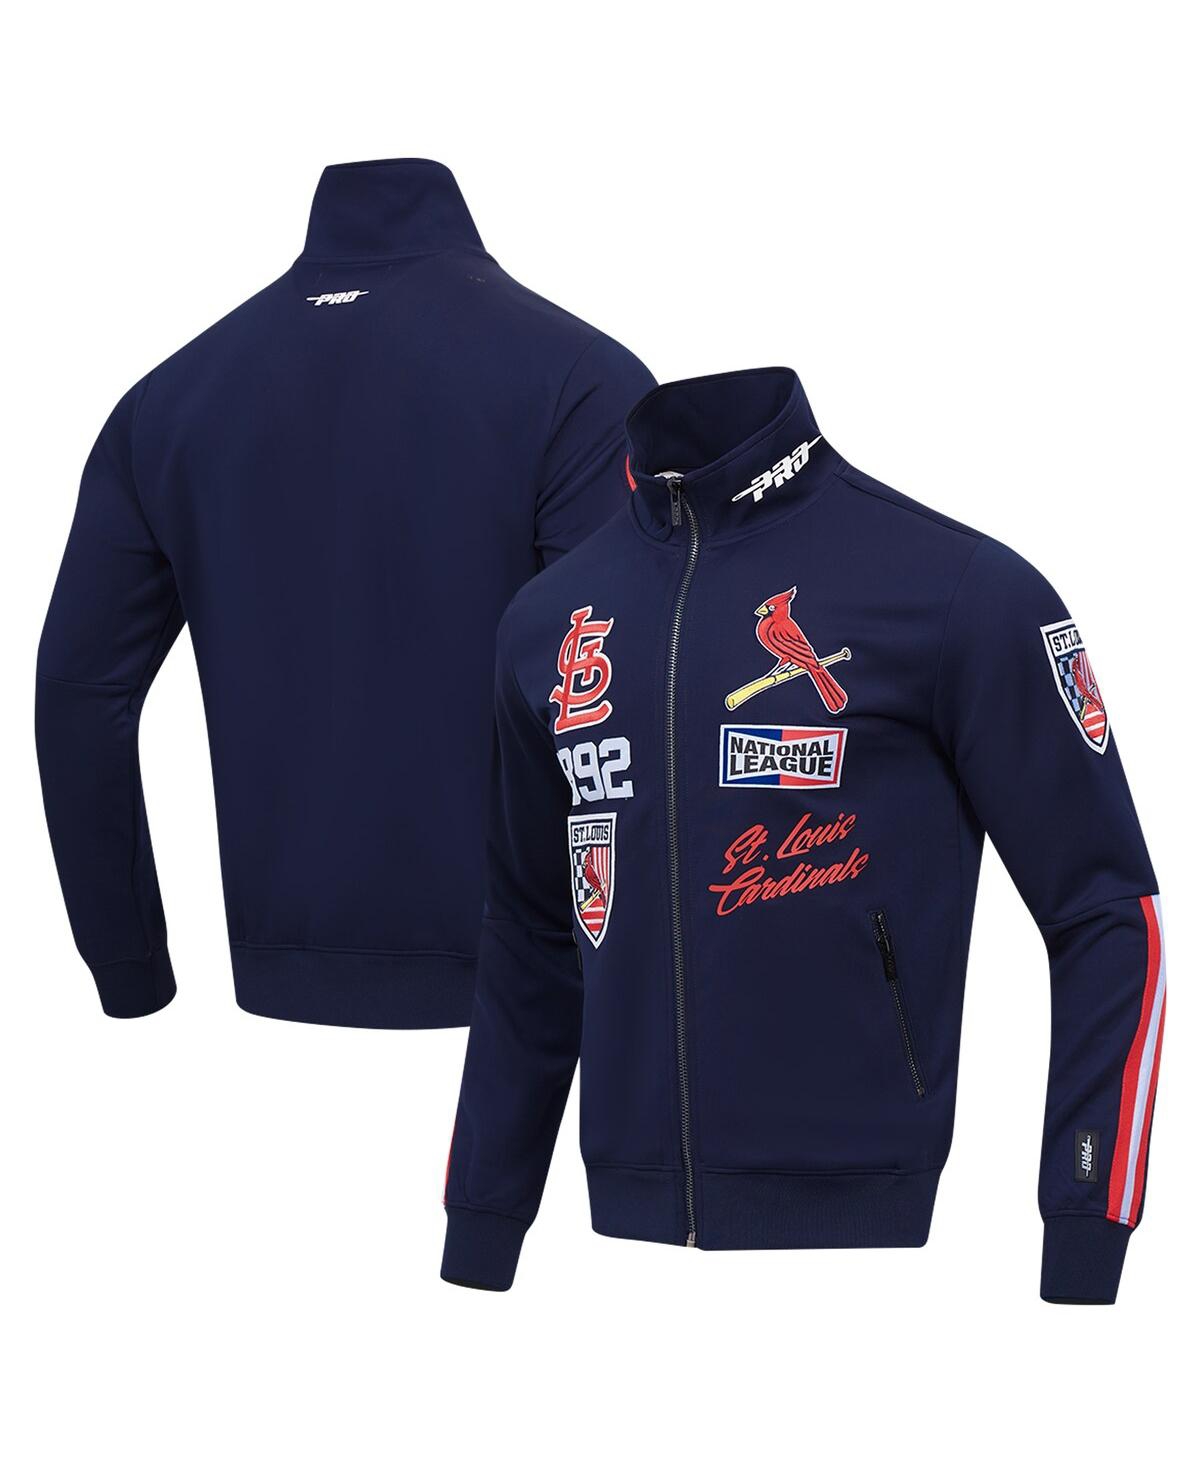 Men's Navy St. Louis Cardinals Fast Lane Full-Zip Track Jacket - Navy